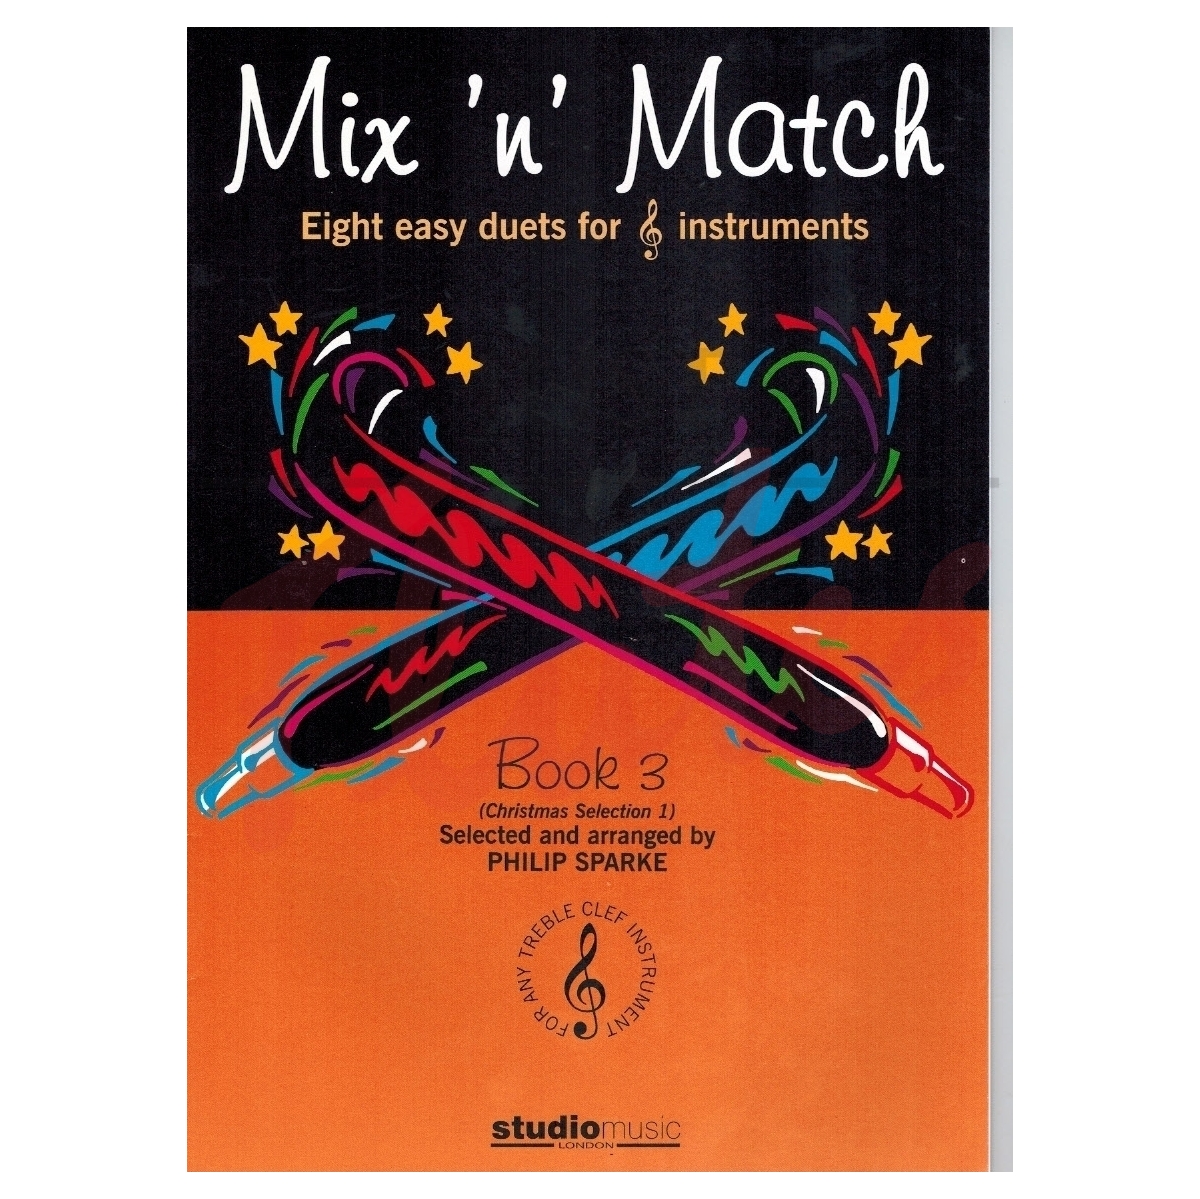 Mix 'n' Match Book 3: Carols